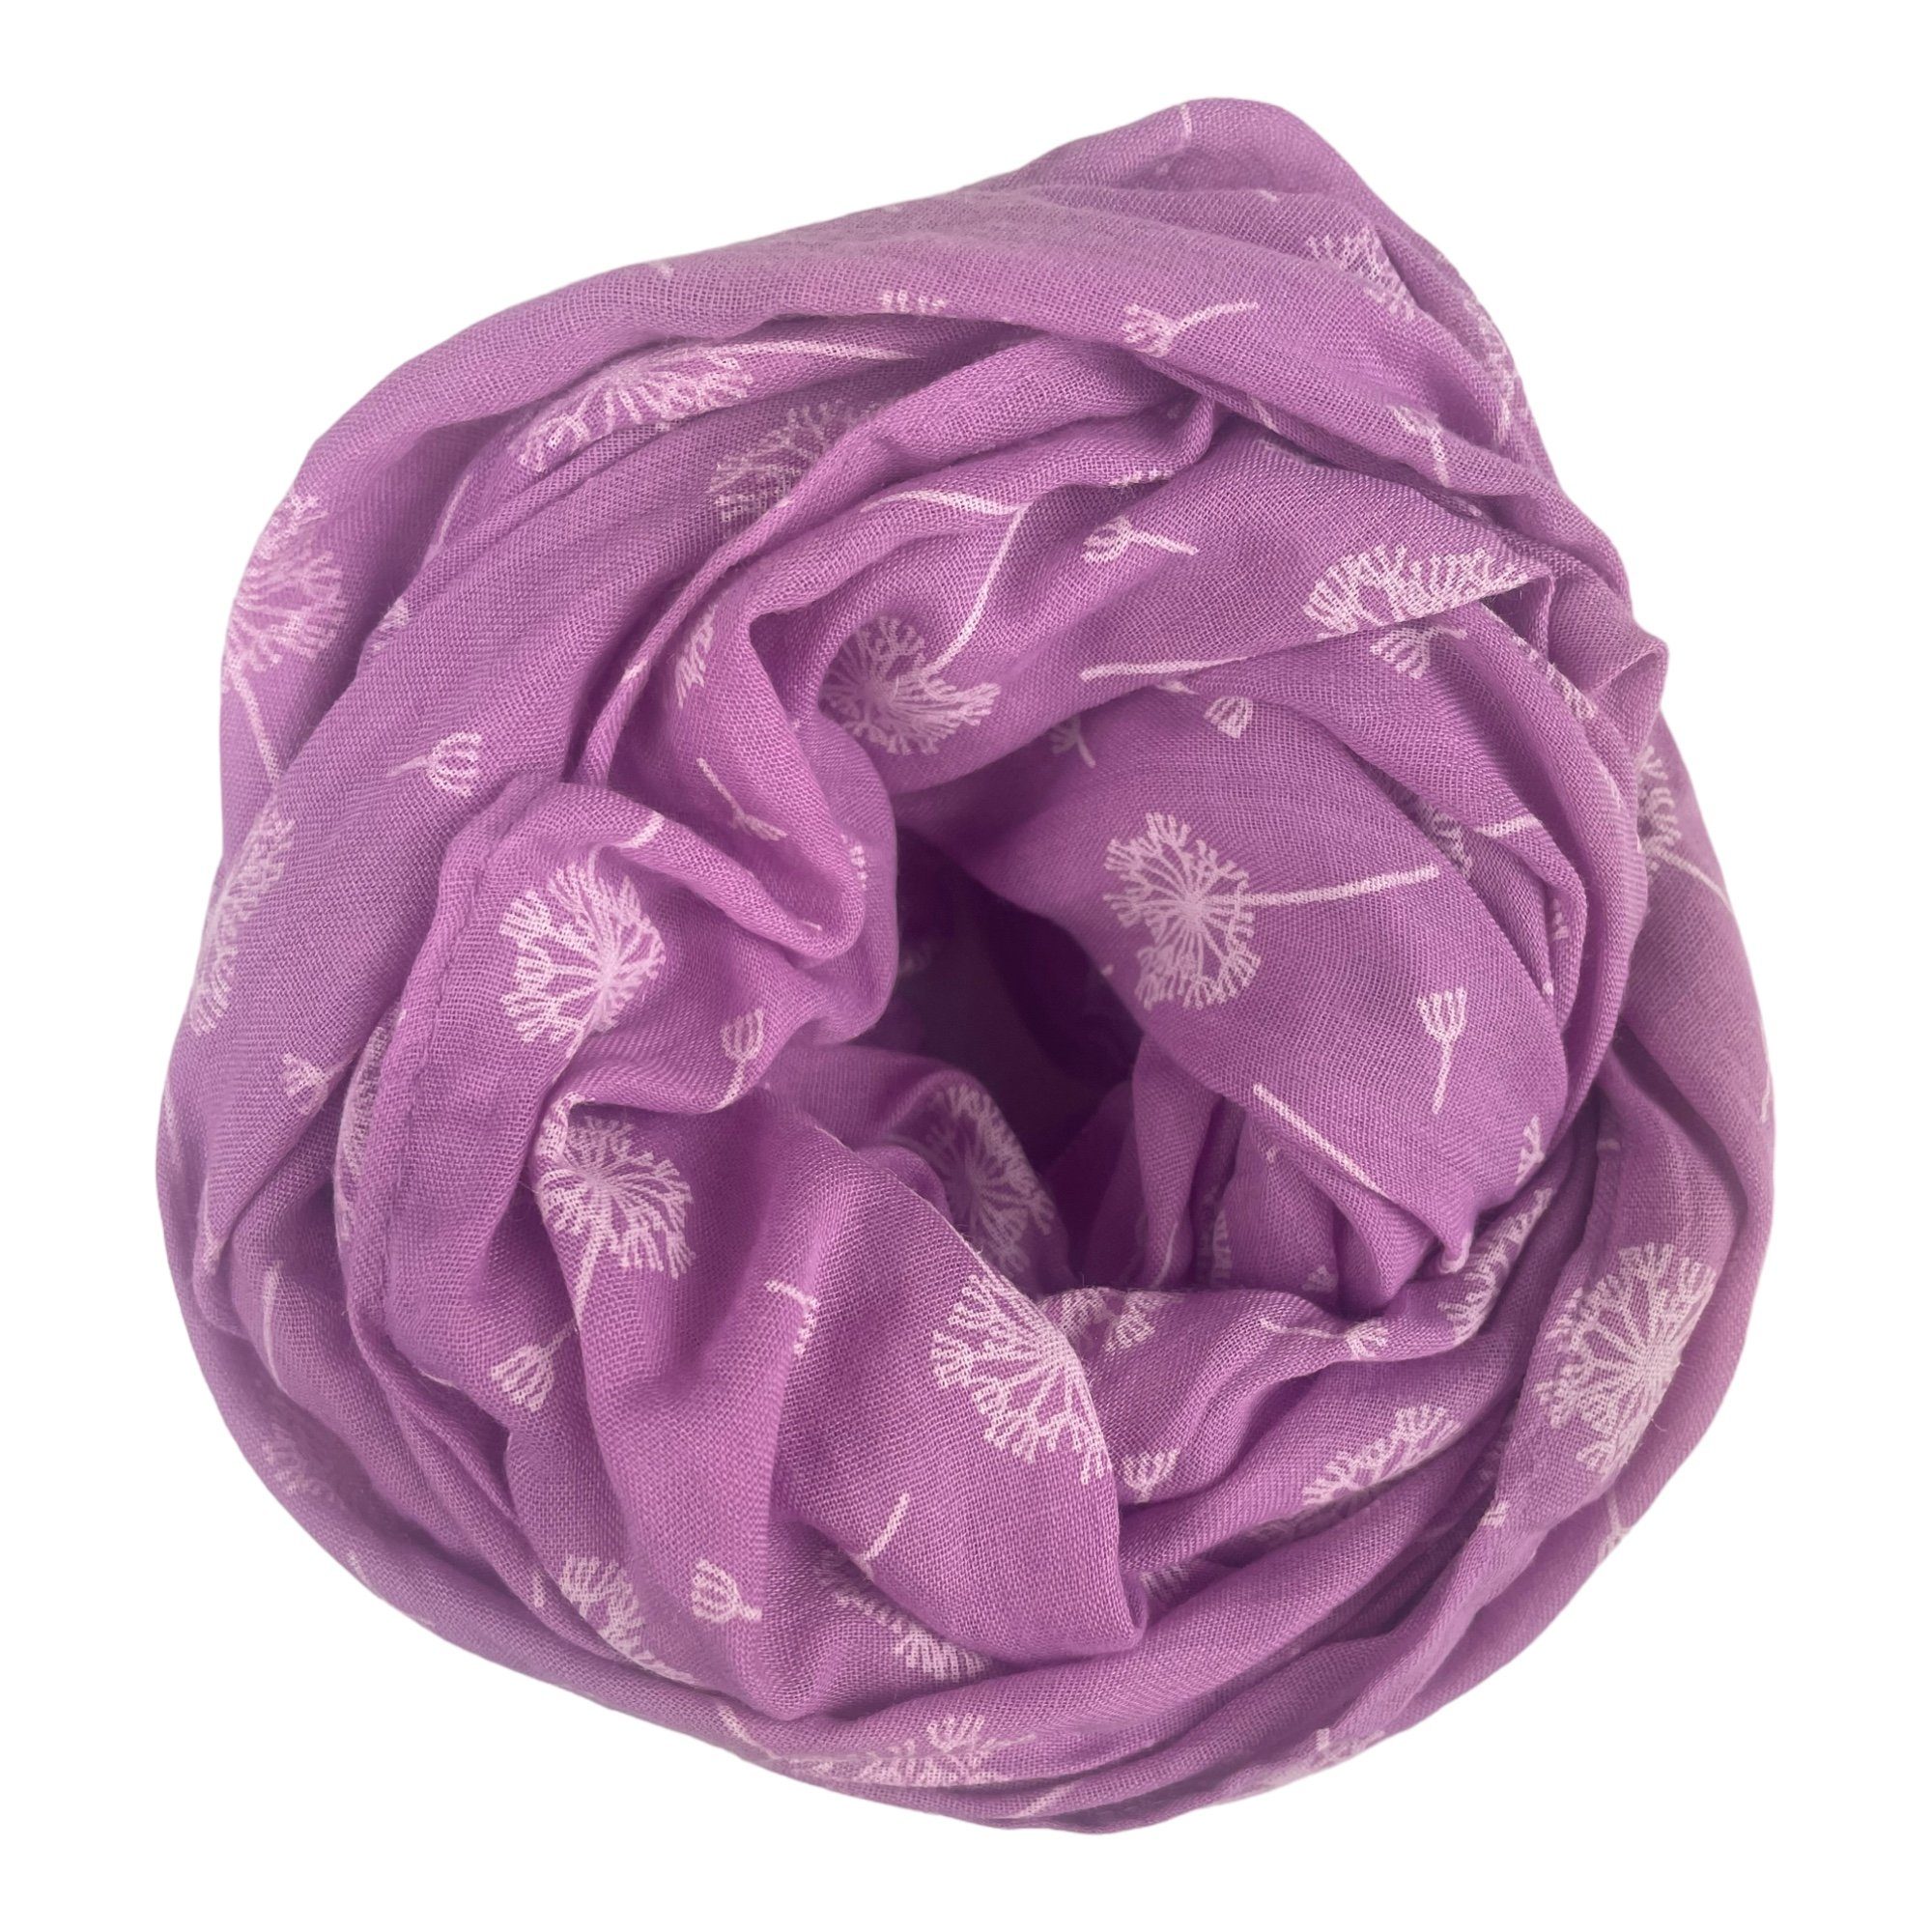 Tücher & Pusteblumen SS-731 mit print, Trend Muster, lila Loop Schal Taschen4life Farbwahl, Sommer Damen Schals